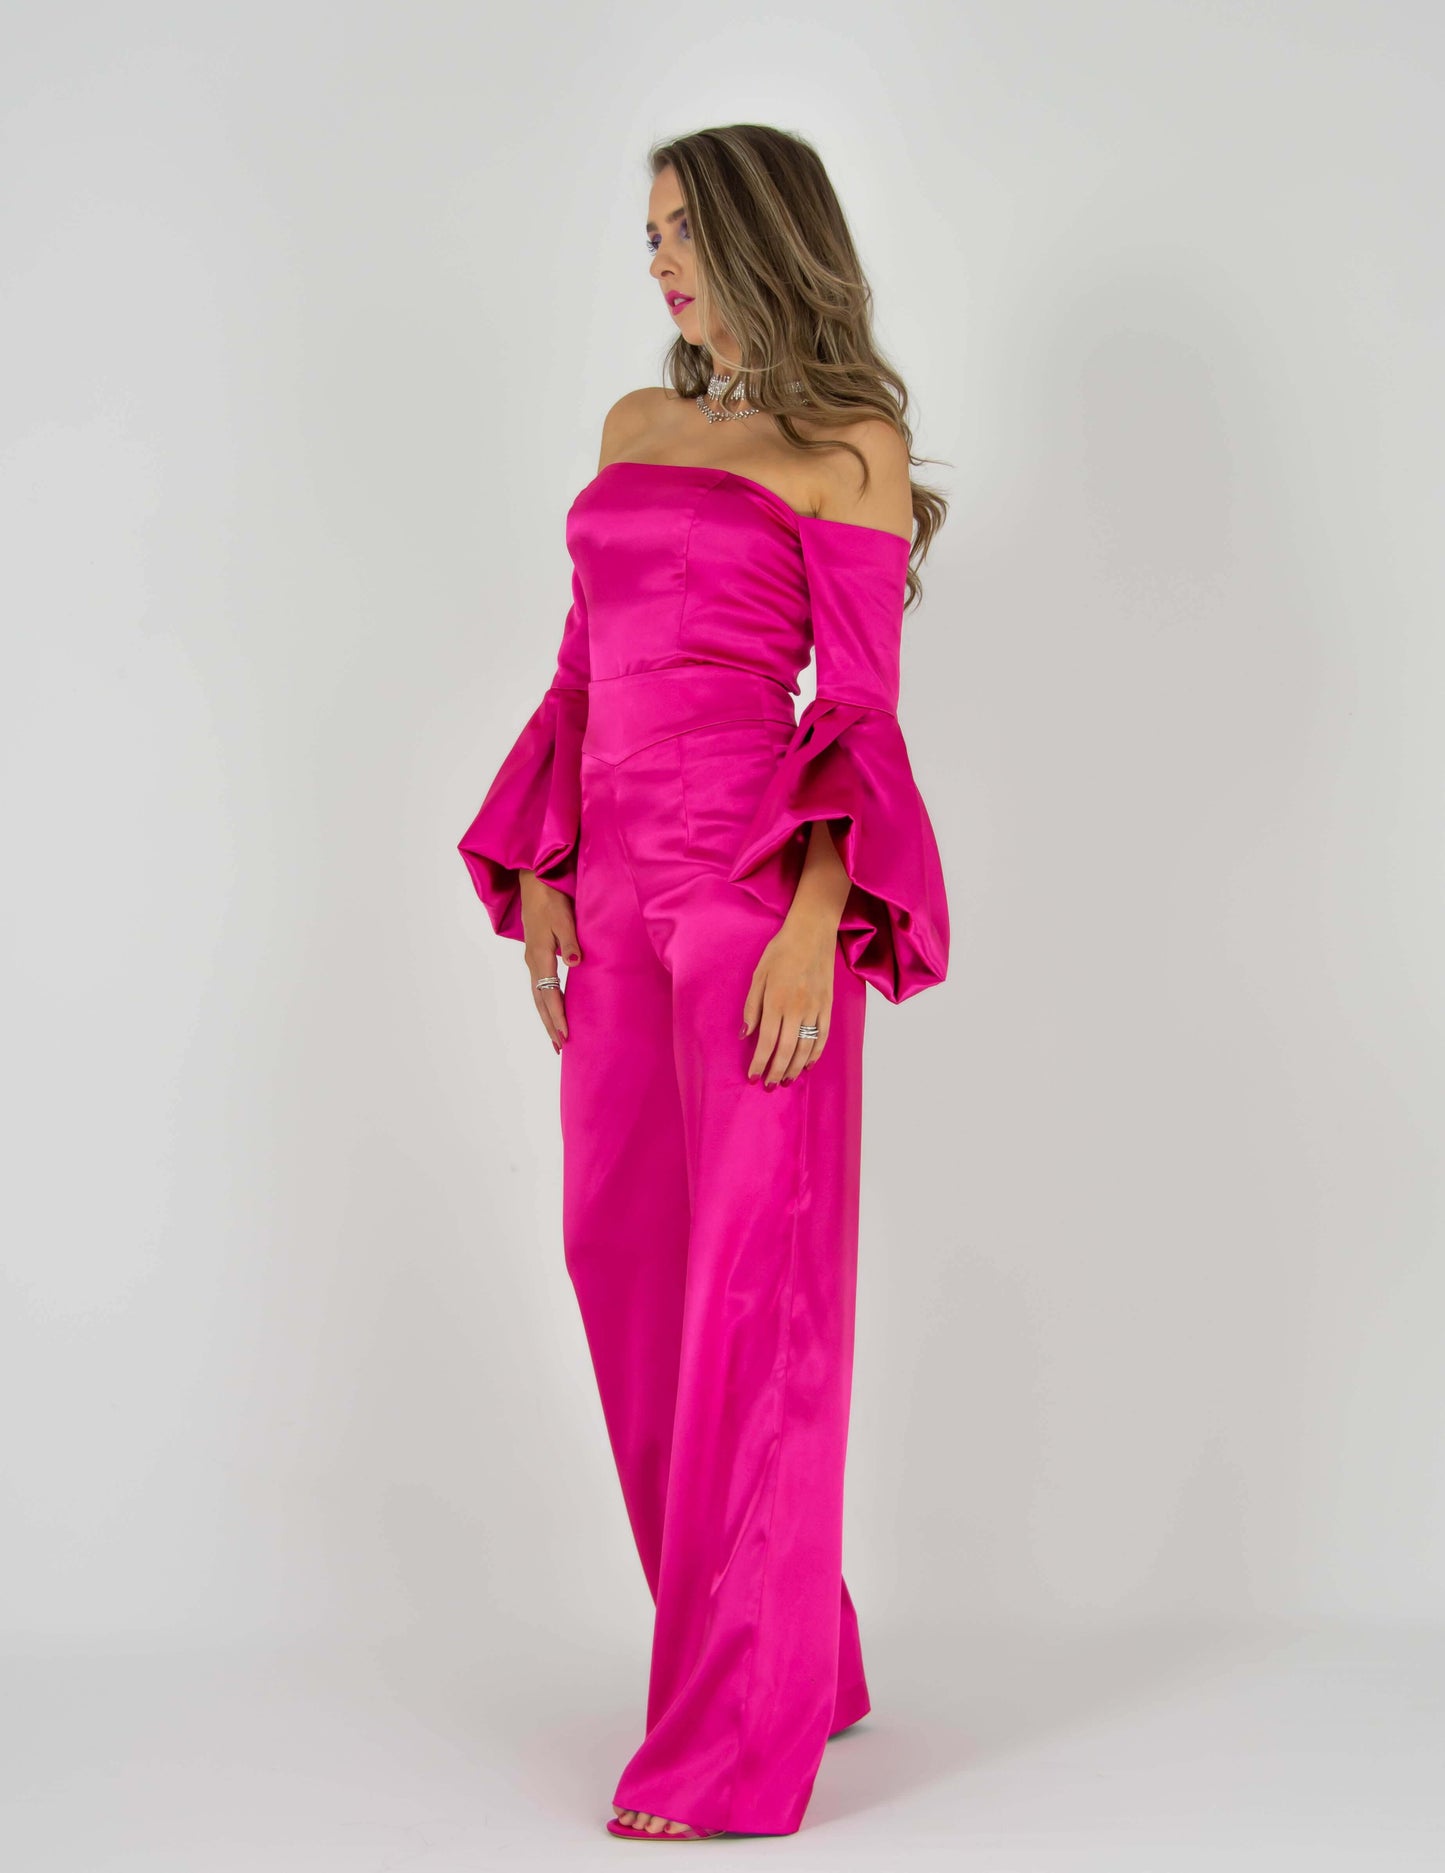 Wild Dream Satin Trousers - Pink by Tia Dorraine Women's Luxury Fashion Designer Clothing Brand